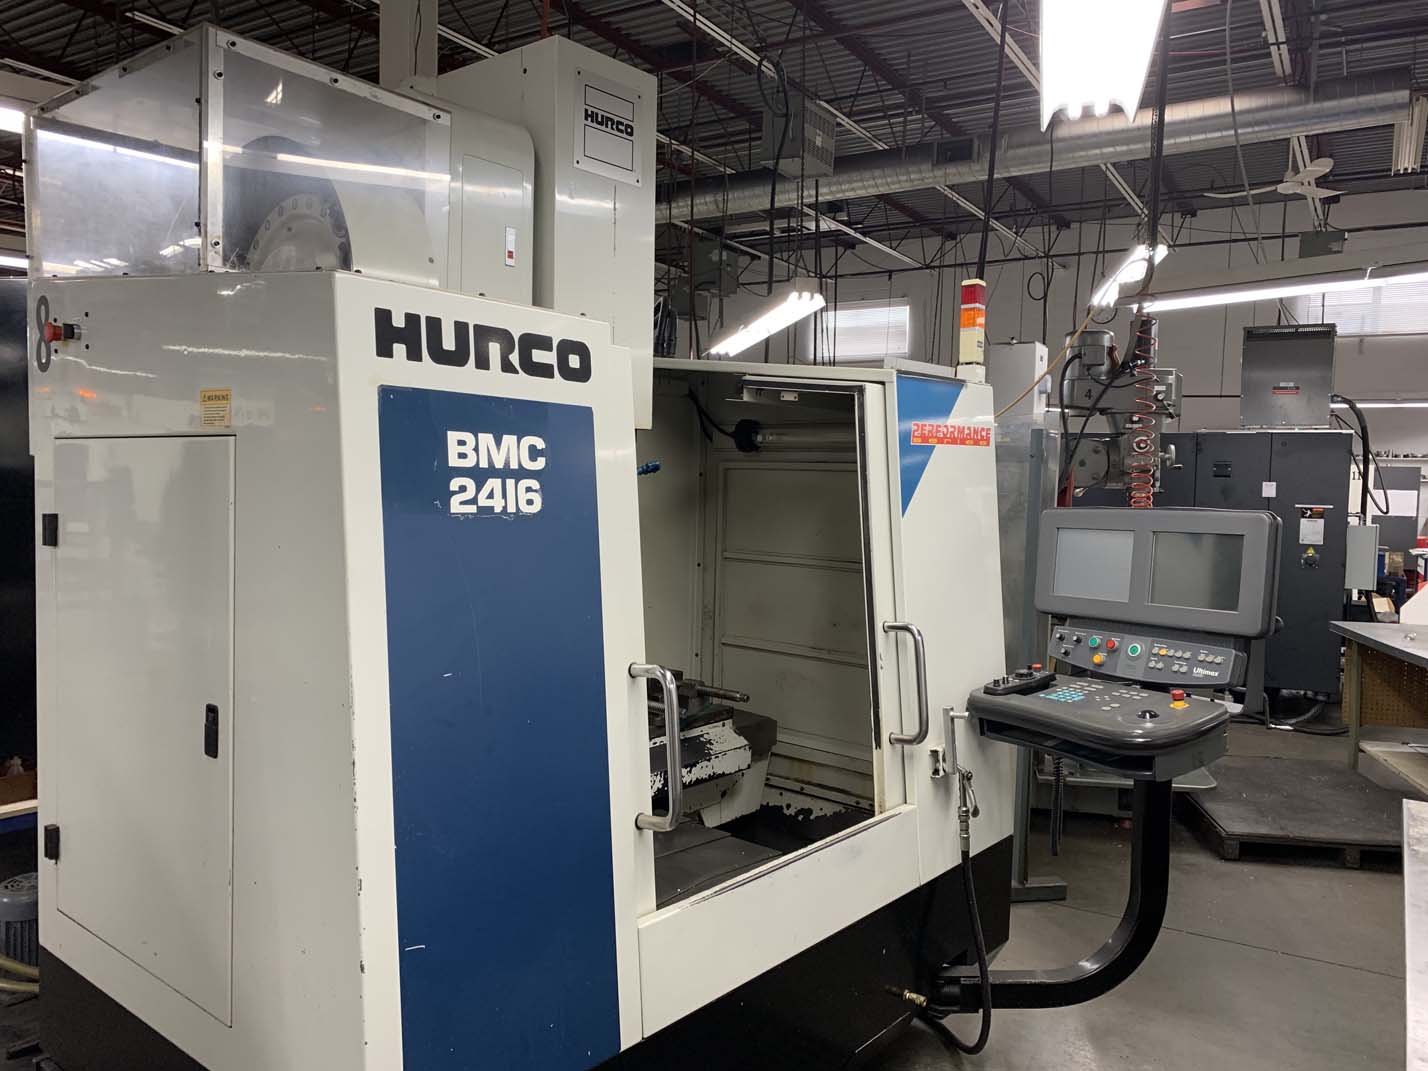 Hurco BMC-2416 Vertical Machining Center